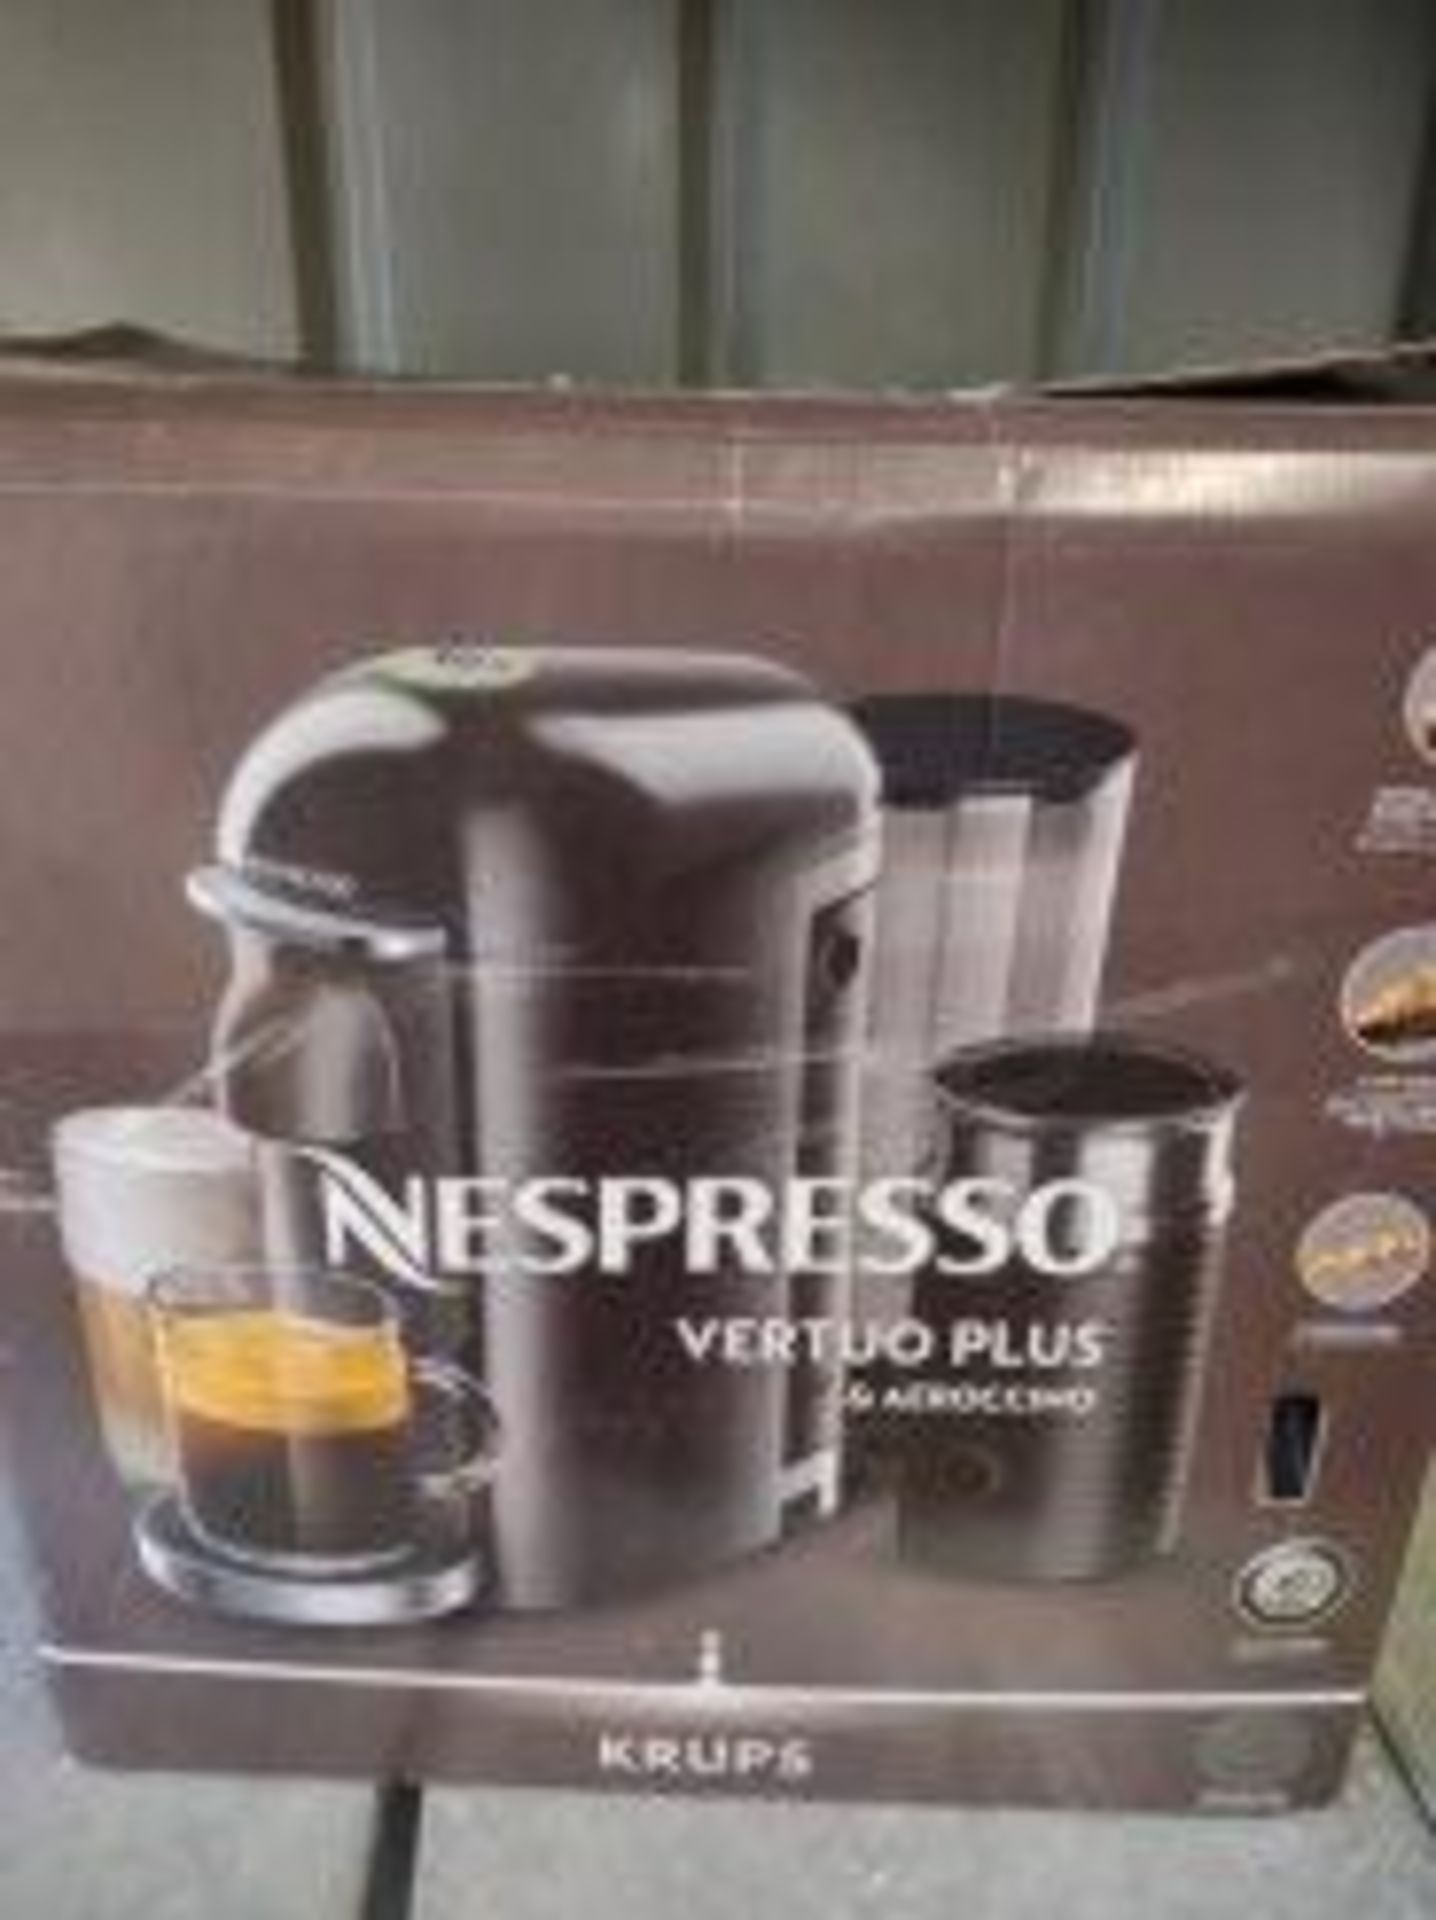 Nespresso Vertuo pluss coffee machine – Approx rrp £189.99